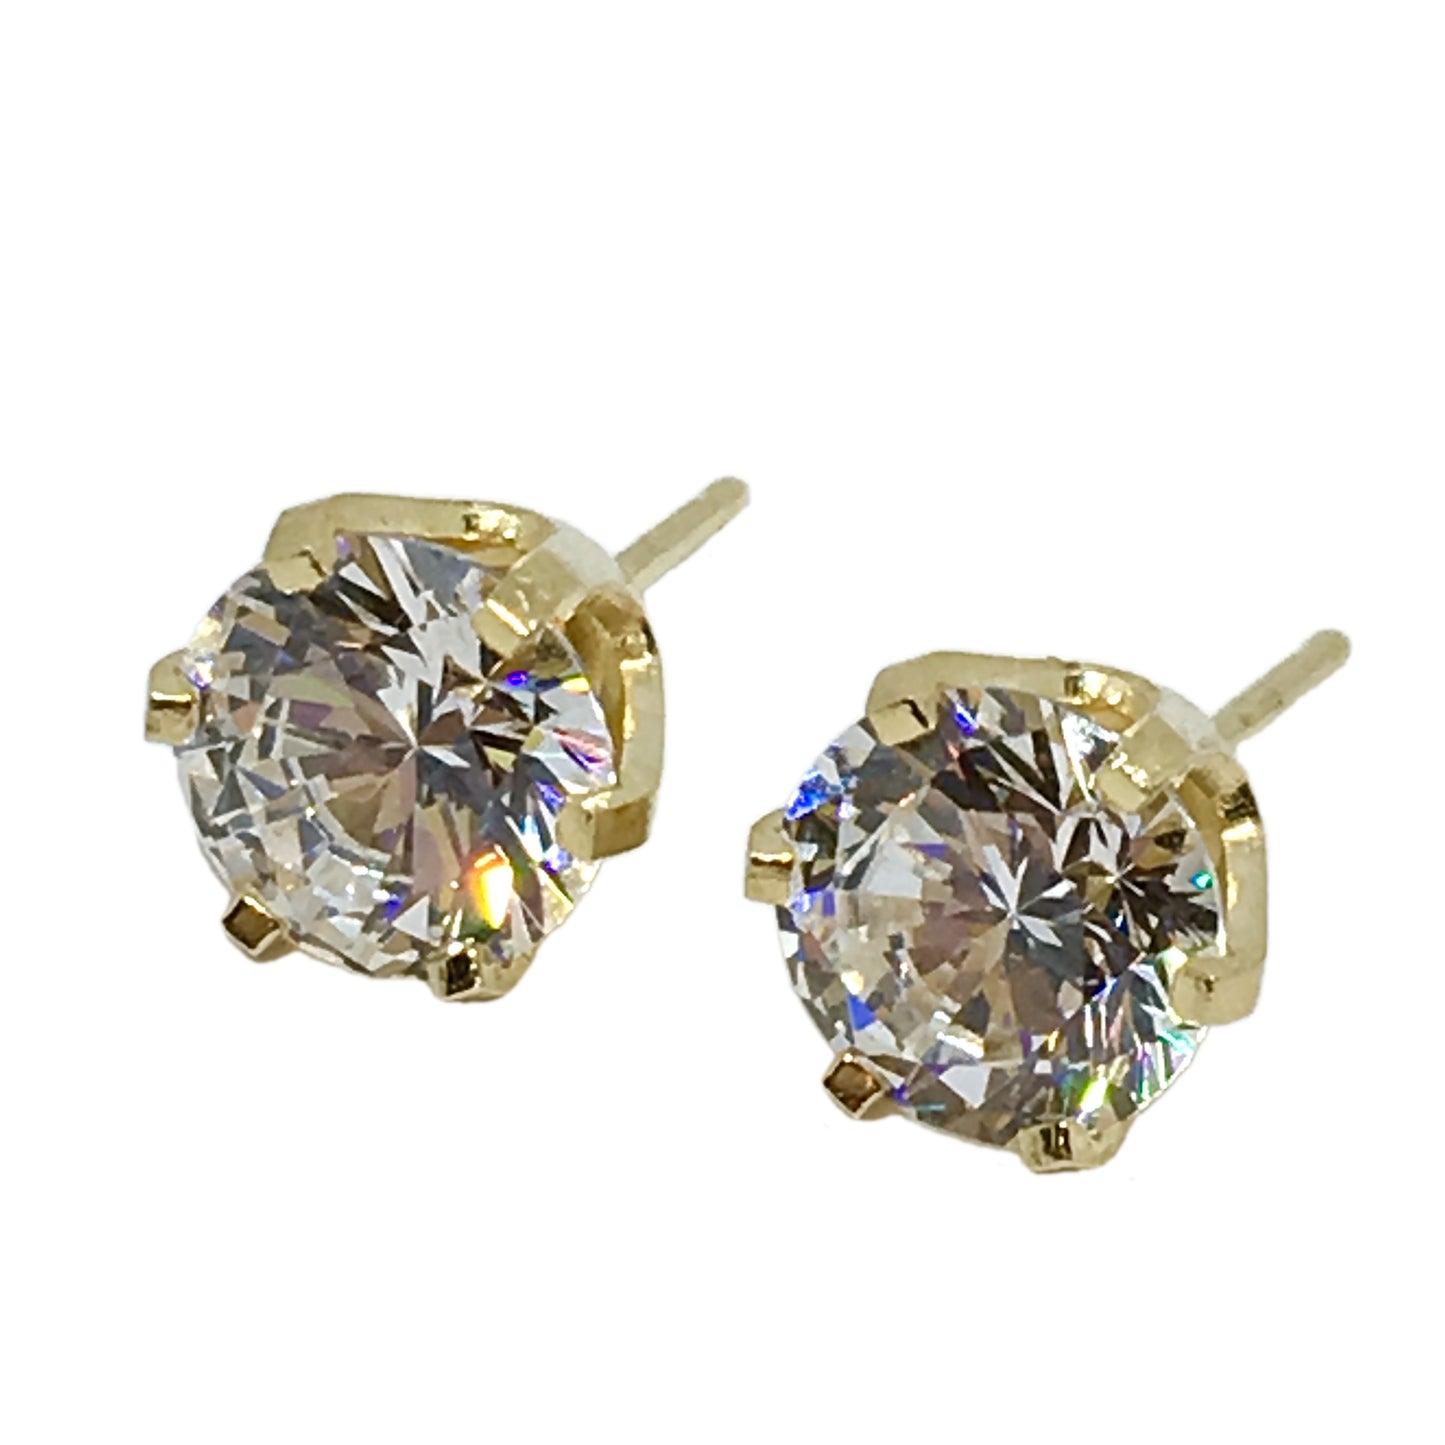 Stud Earrings Mens Womens - 14k Gold Sparkly 7mm Diamond Alternative CZ Stud Earrings